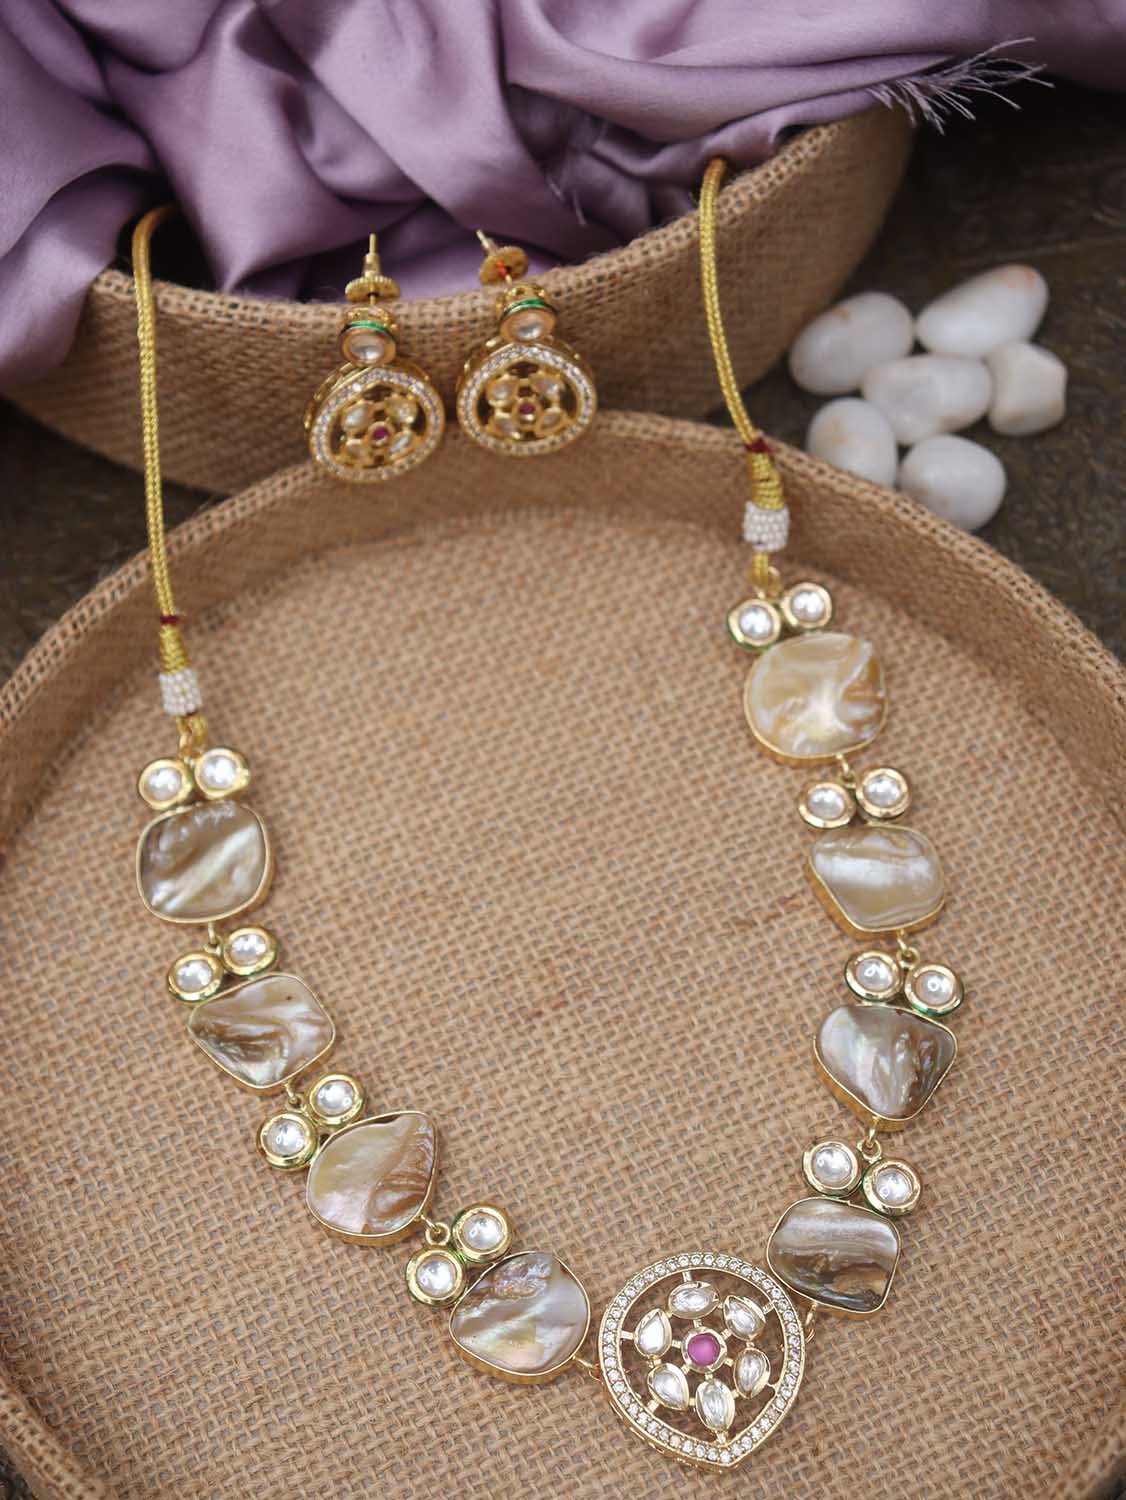 Shop Luxurionworld's Exclusive Necklace Set for a Graceful Look - Luxurion World